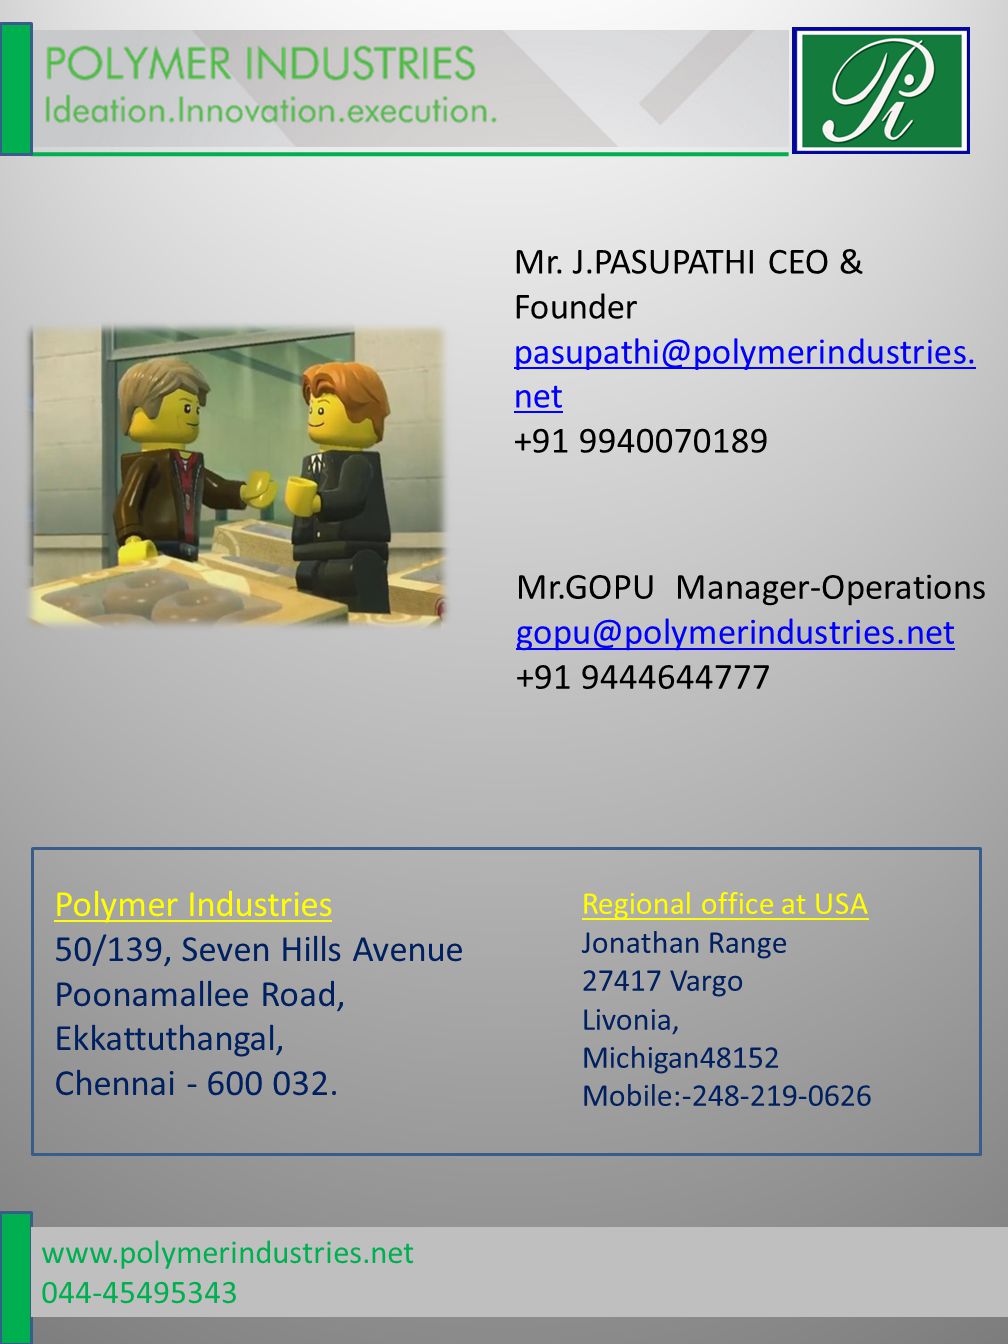 Regional office at USA Jonathan Range Vargo Livonia, Michigan48152 Mobile: Mr.GOPU Manager-Operations Polymer Industries 50/139, Seven Hills Avenue Poonamallee Road, Ekkattuthangal, Chennai